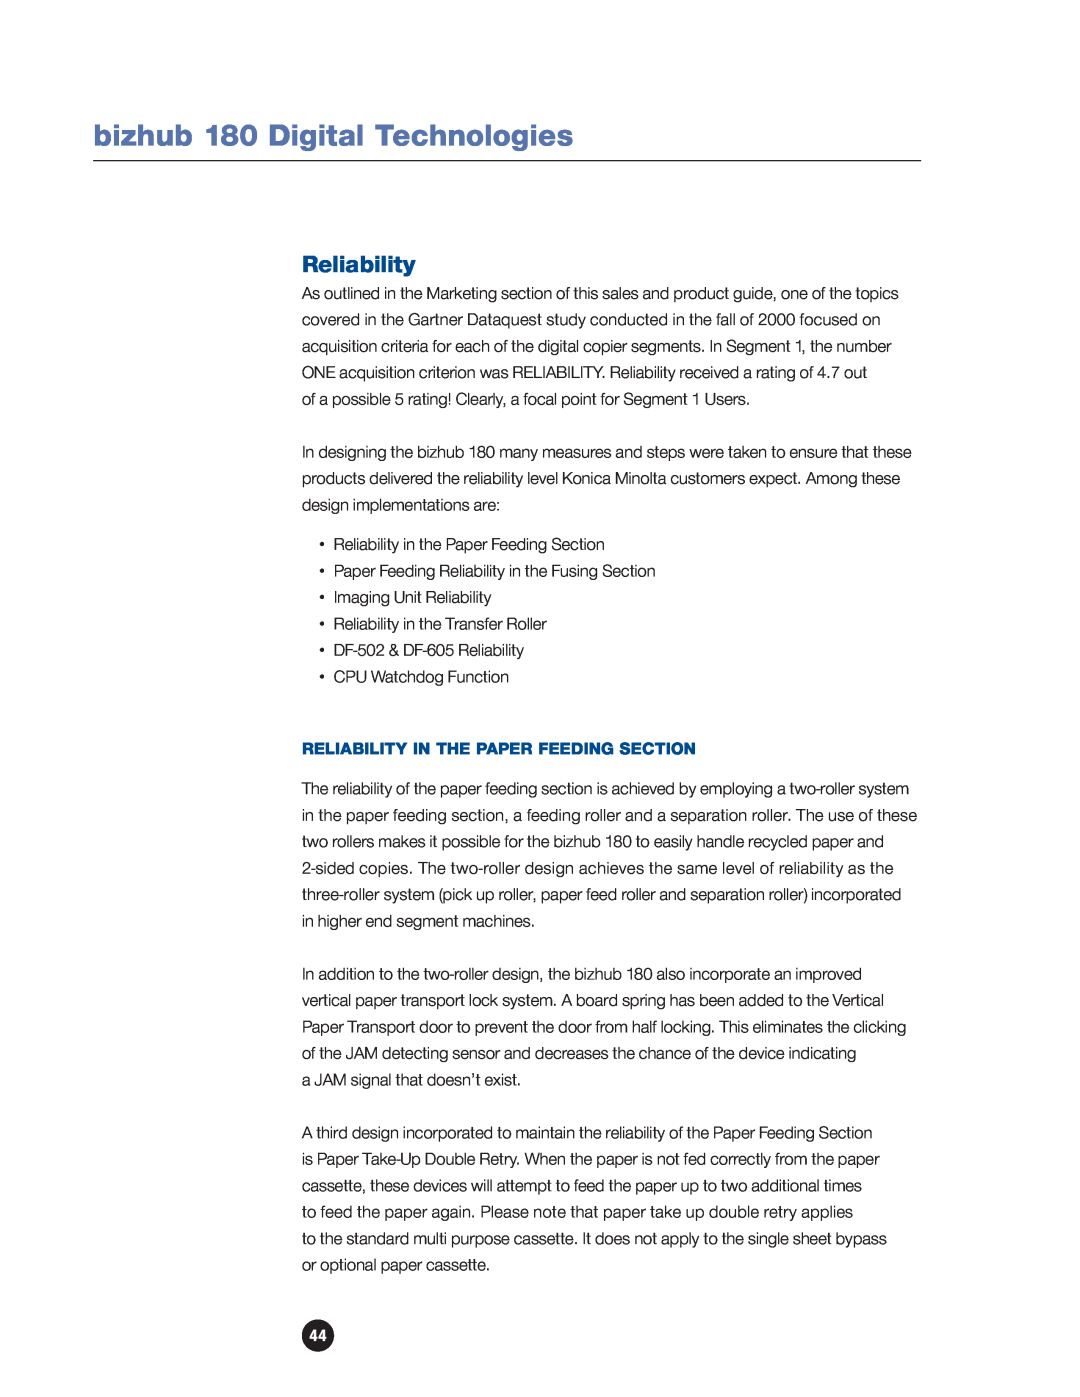 Konica Minolta manual Reliability In The Paper Feeding Section, bizhub 180 Digital Technologies 